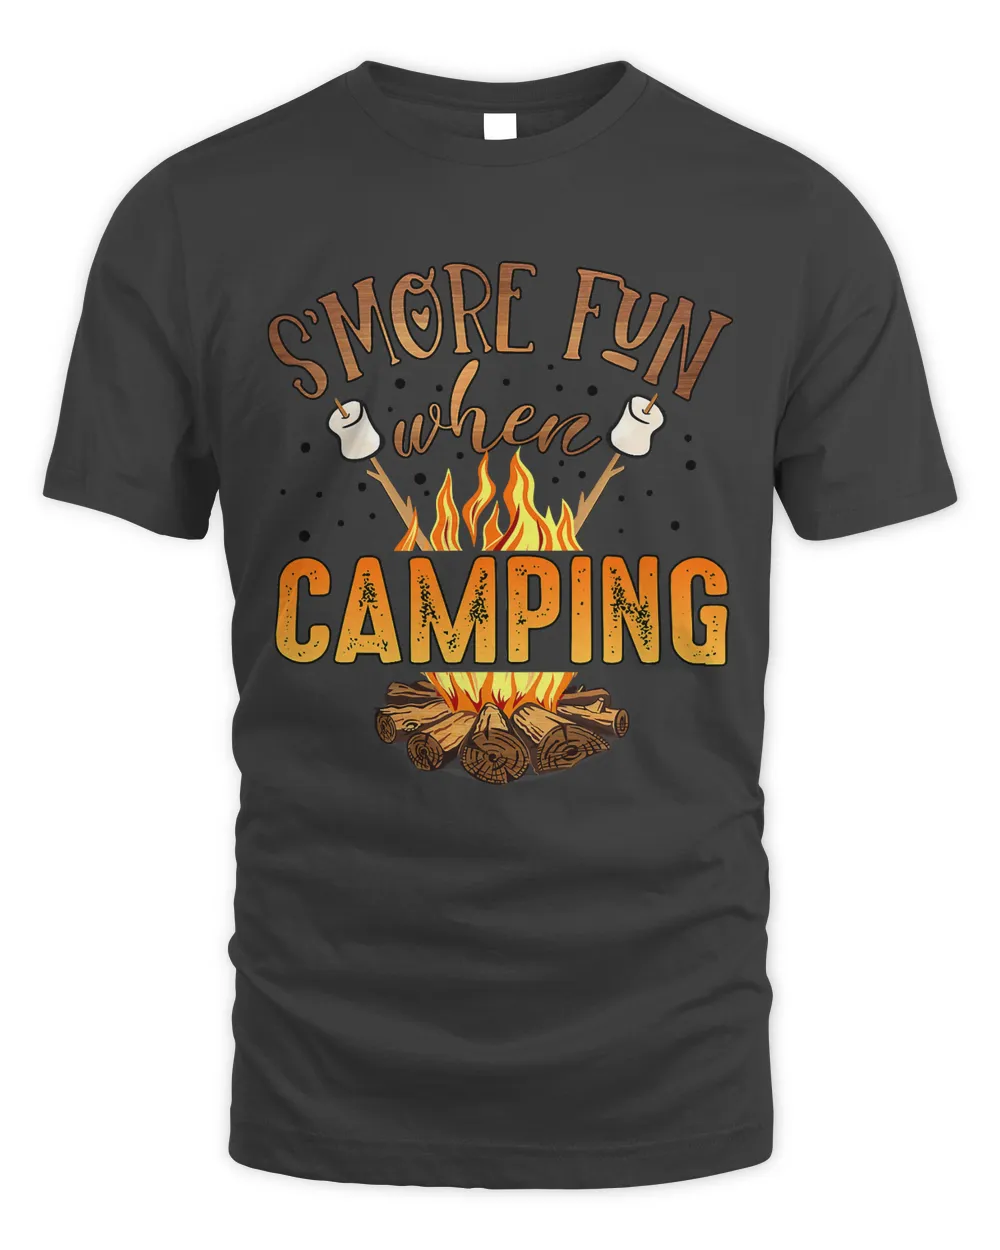 Camping Smore Fun When Camping Camp Life Camping Outfit Gift Camp